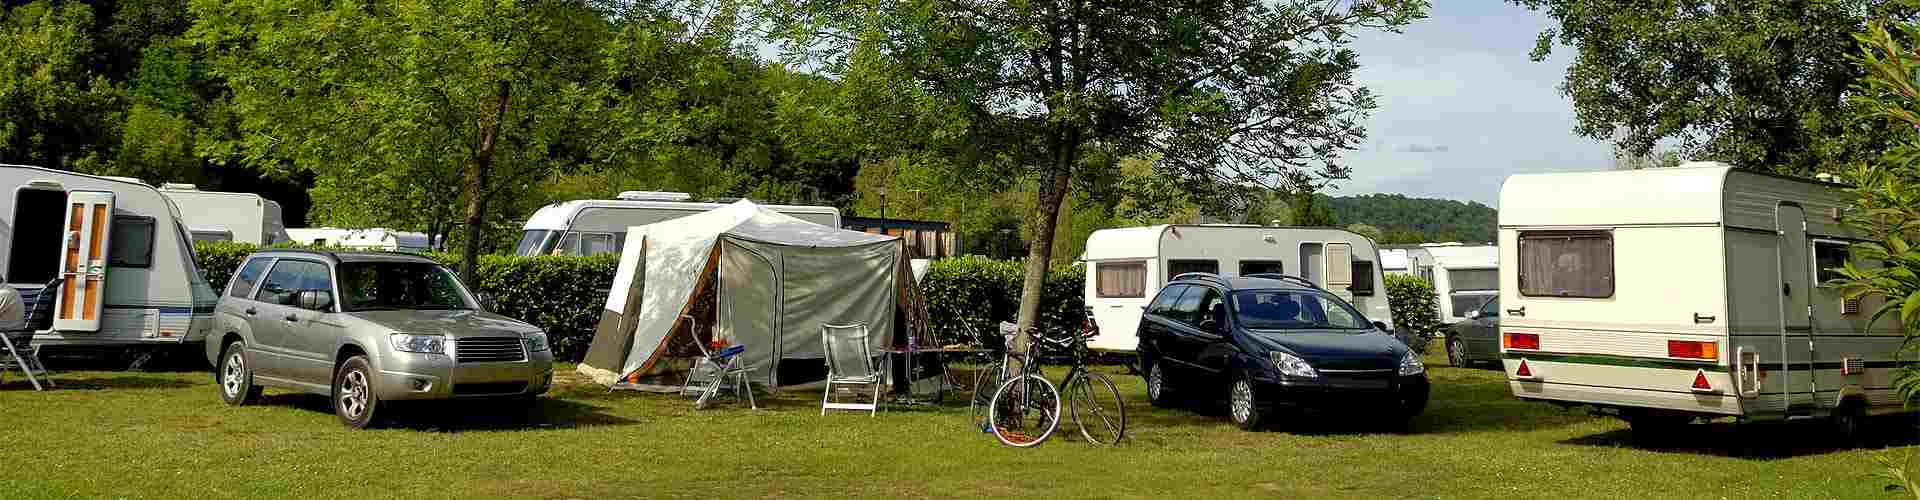 camping o bungalow en Ventosa